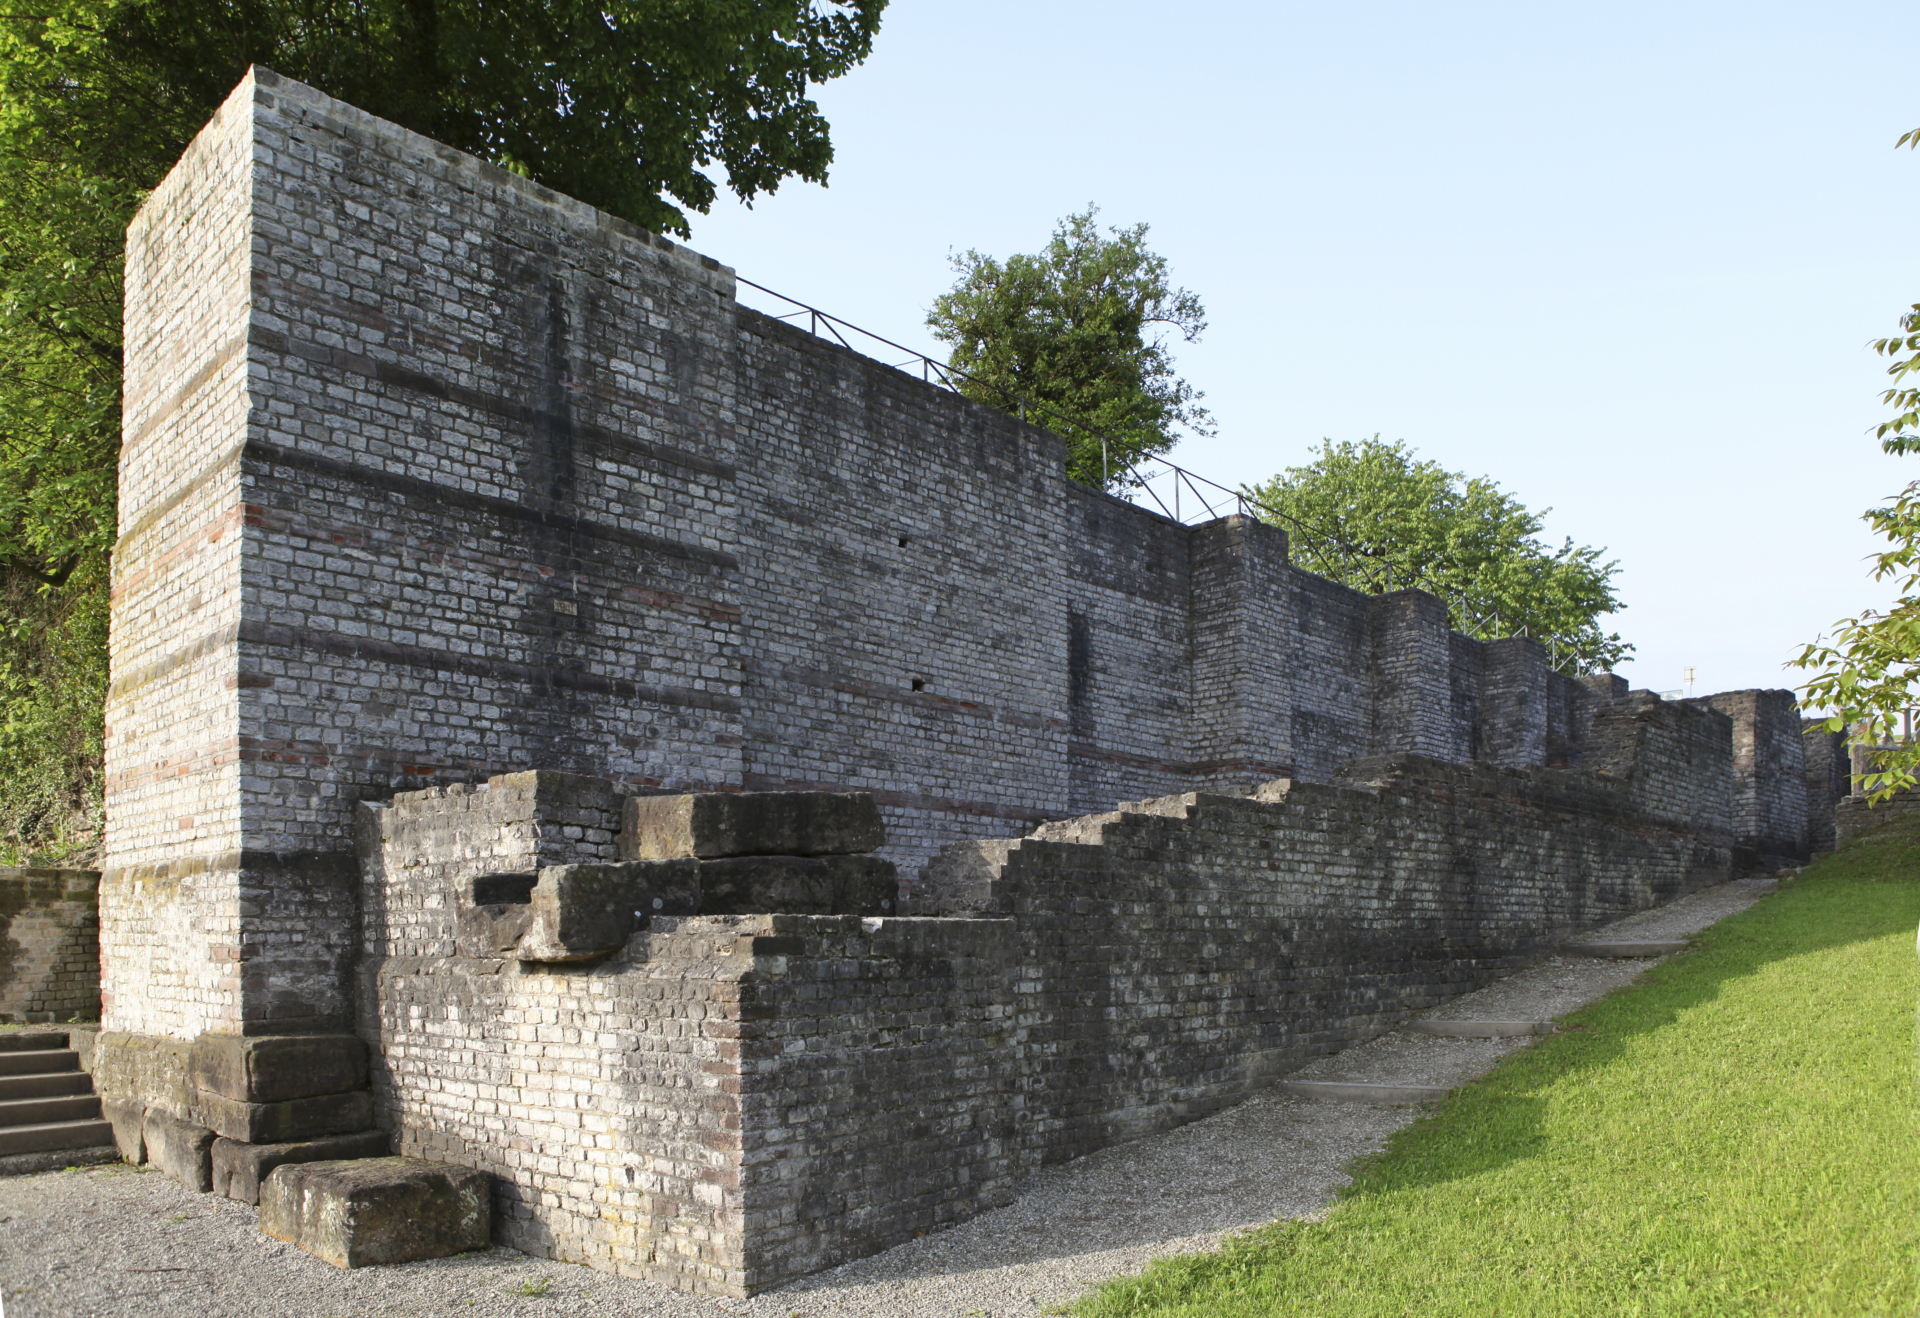 Augusta Raurica Die mächtige Basilikastützmauer